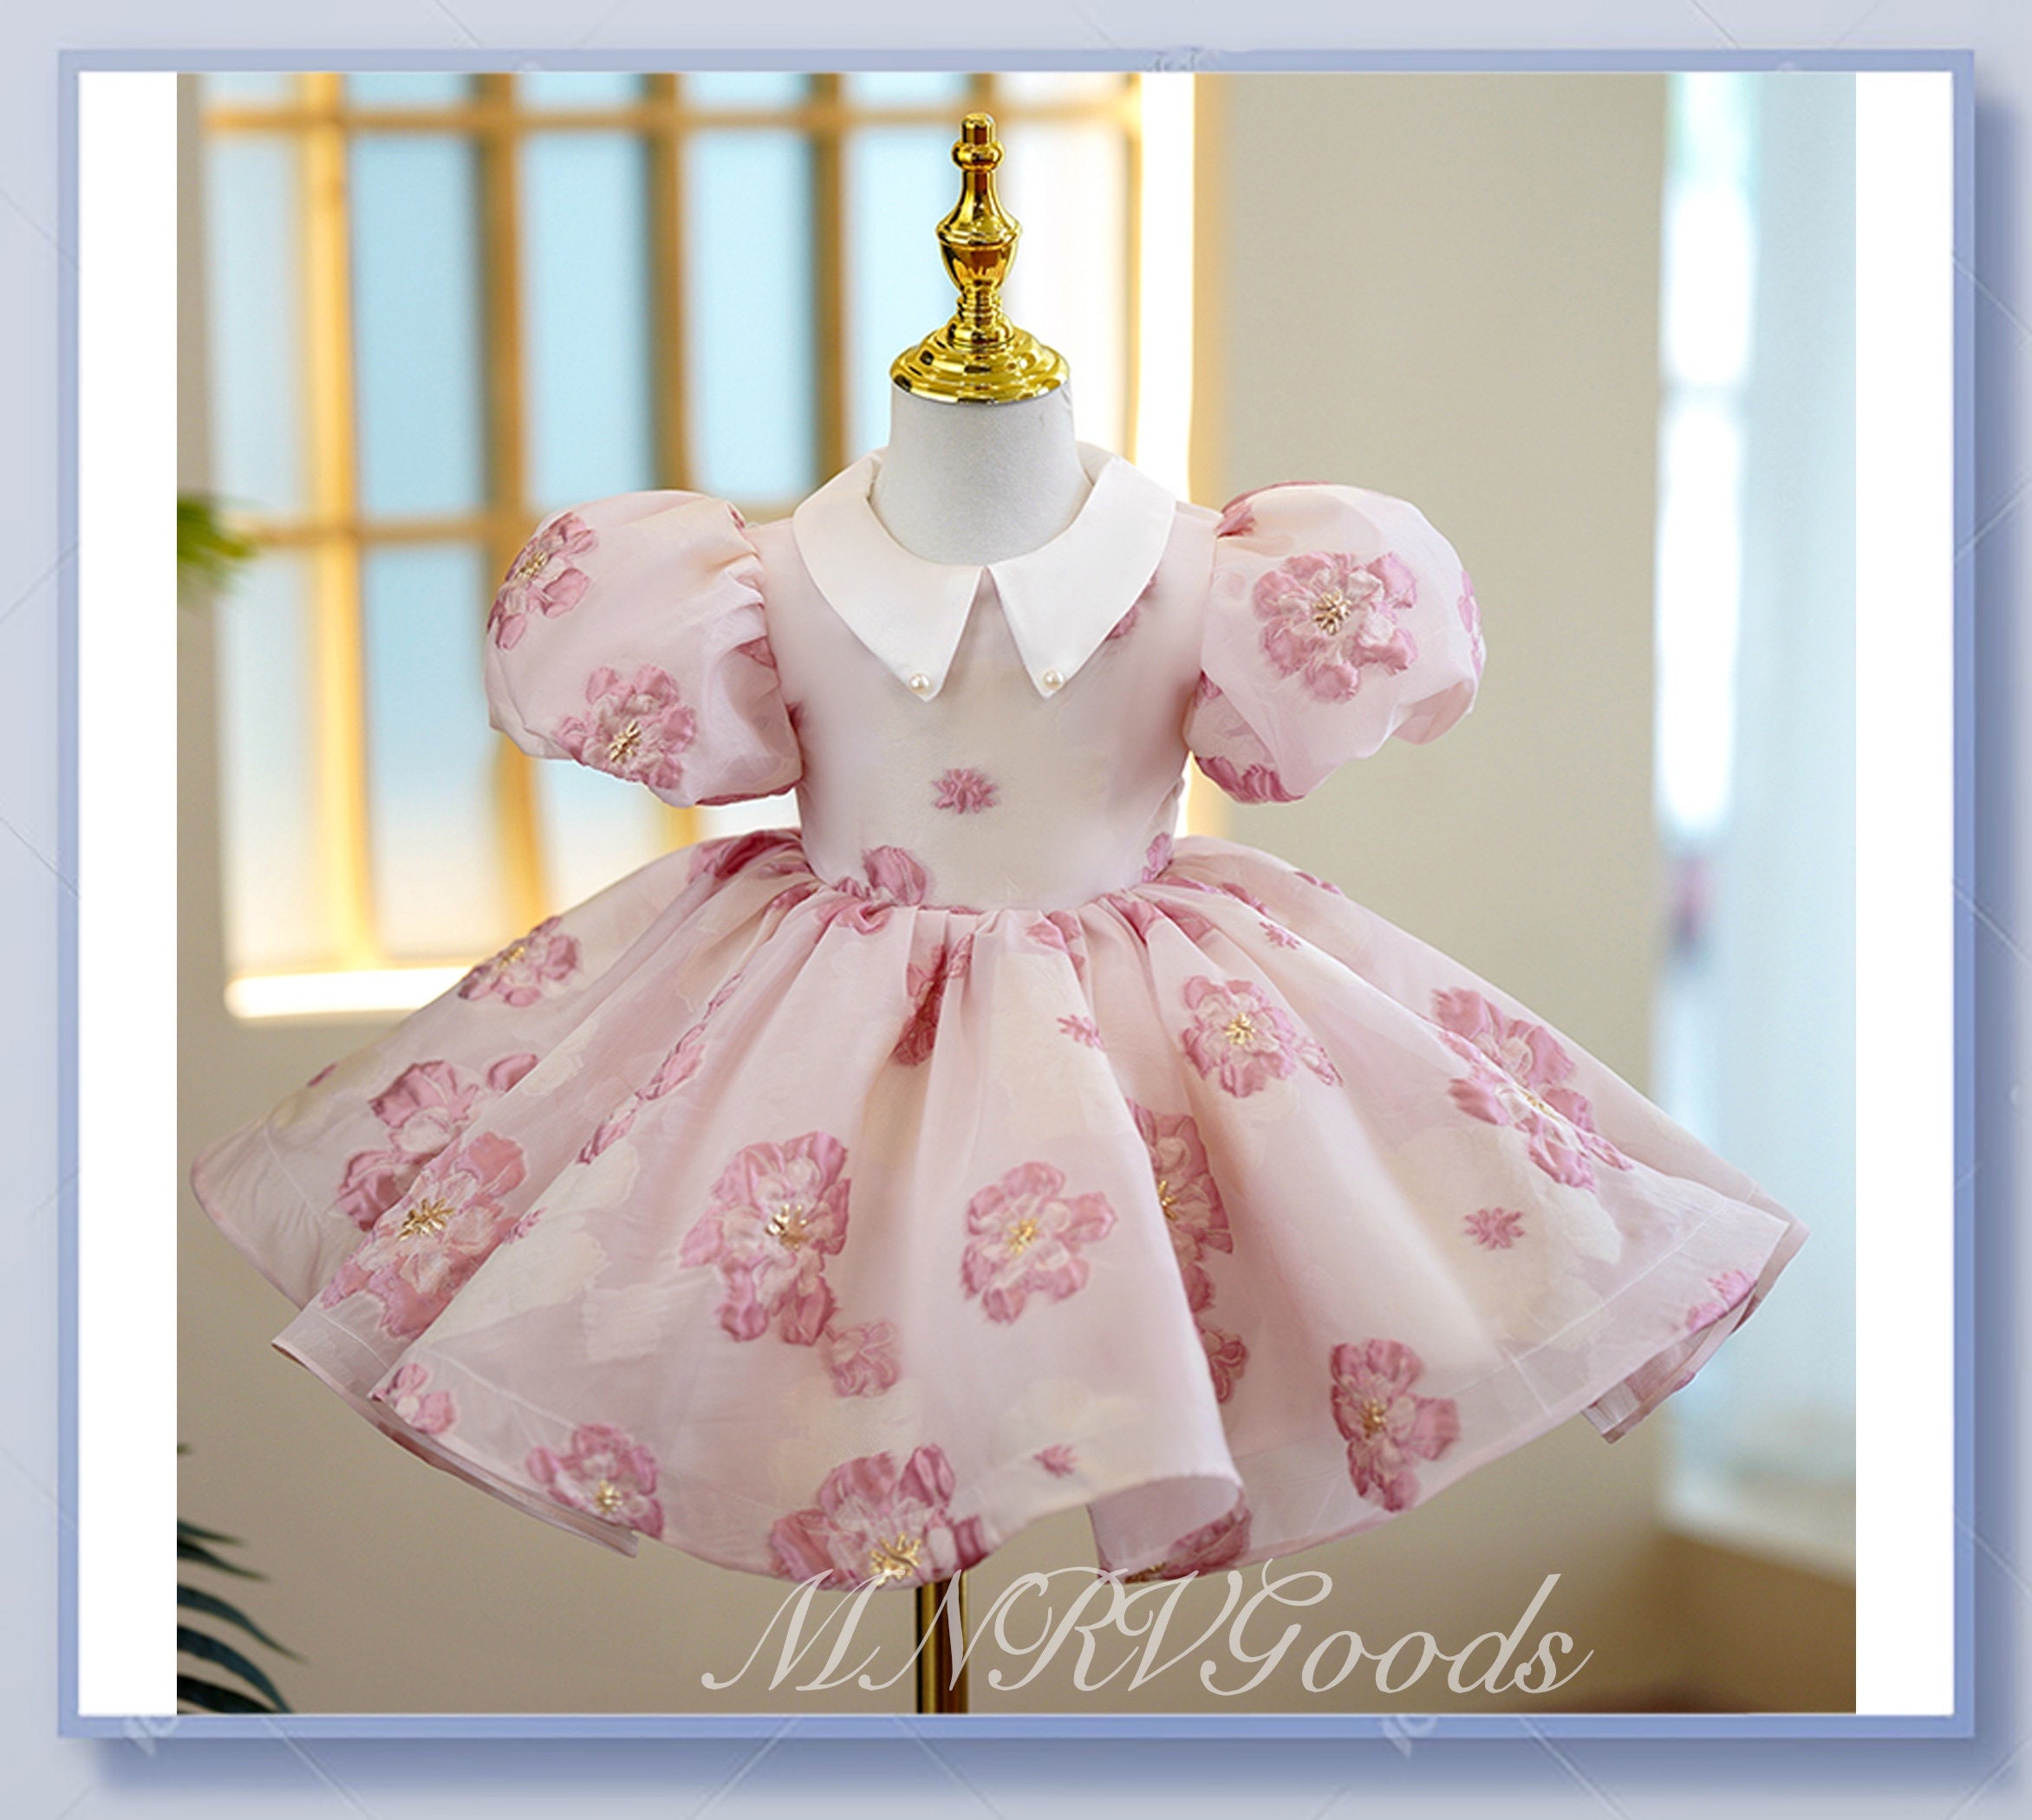 Girl's Dresses – Formal Dresses for Girls - Pink Princess